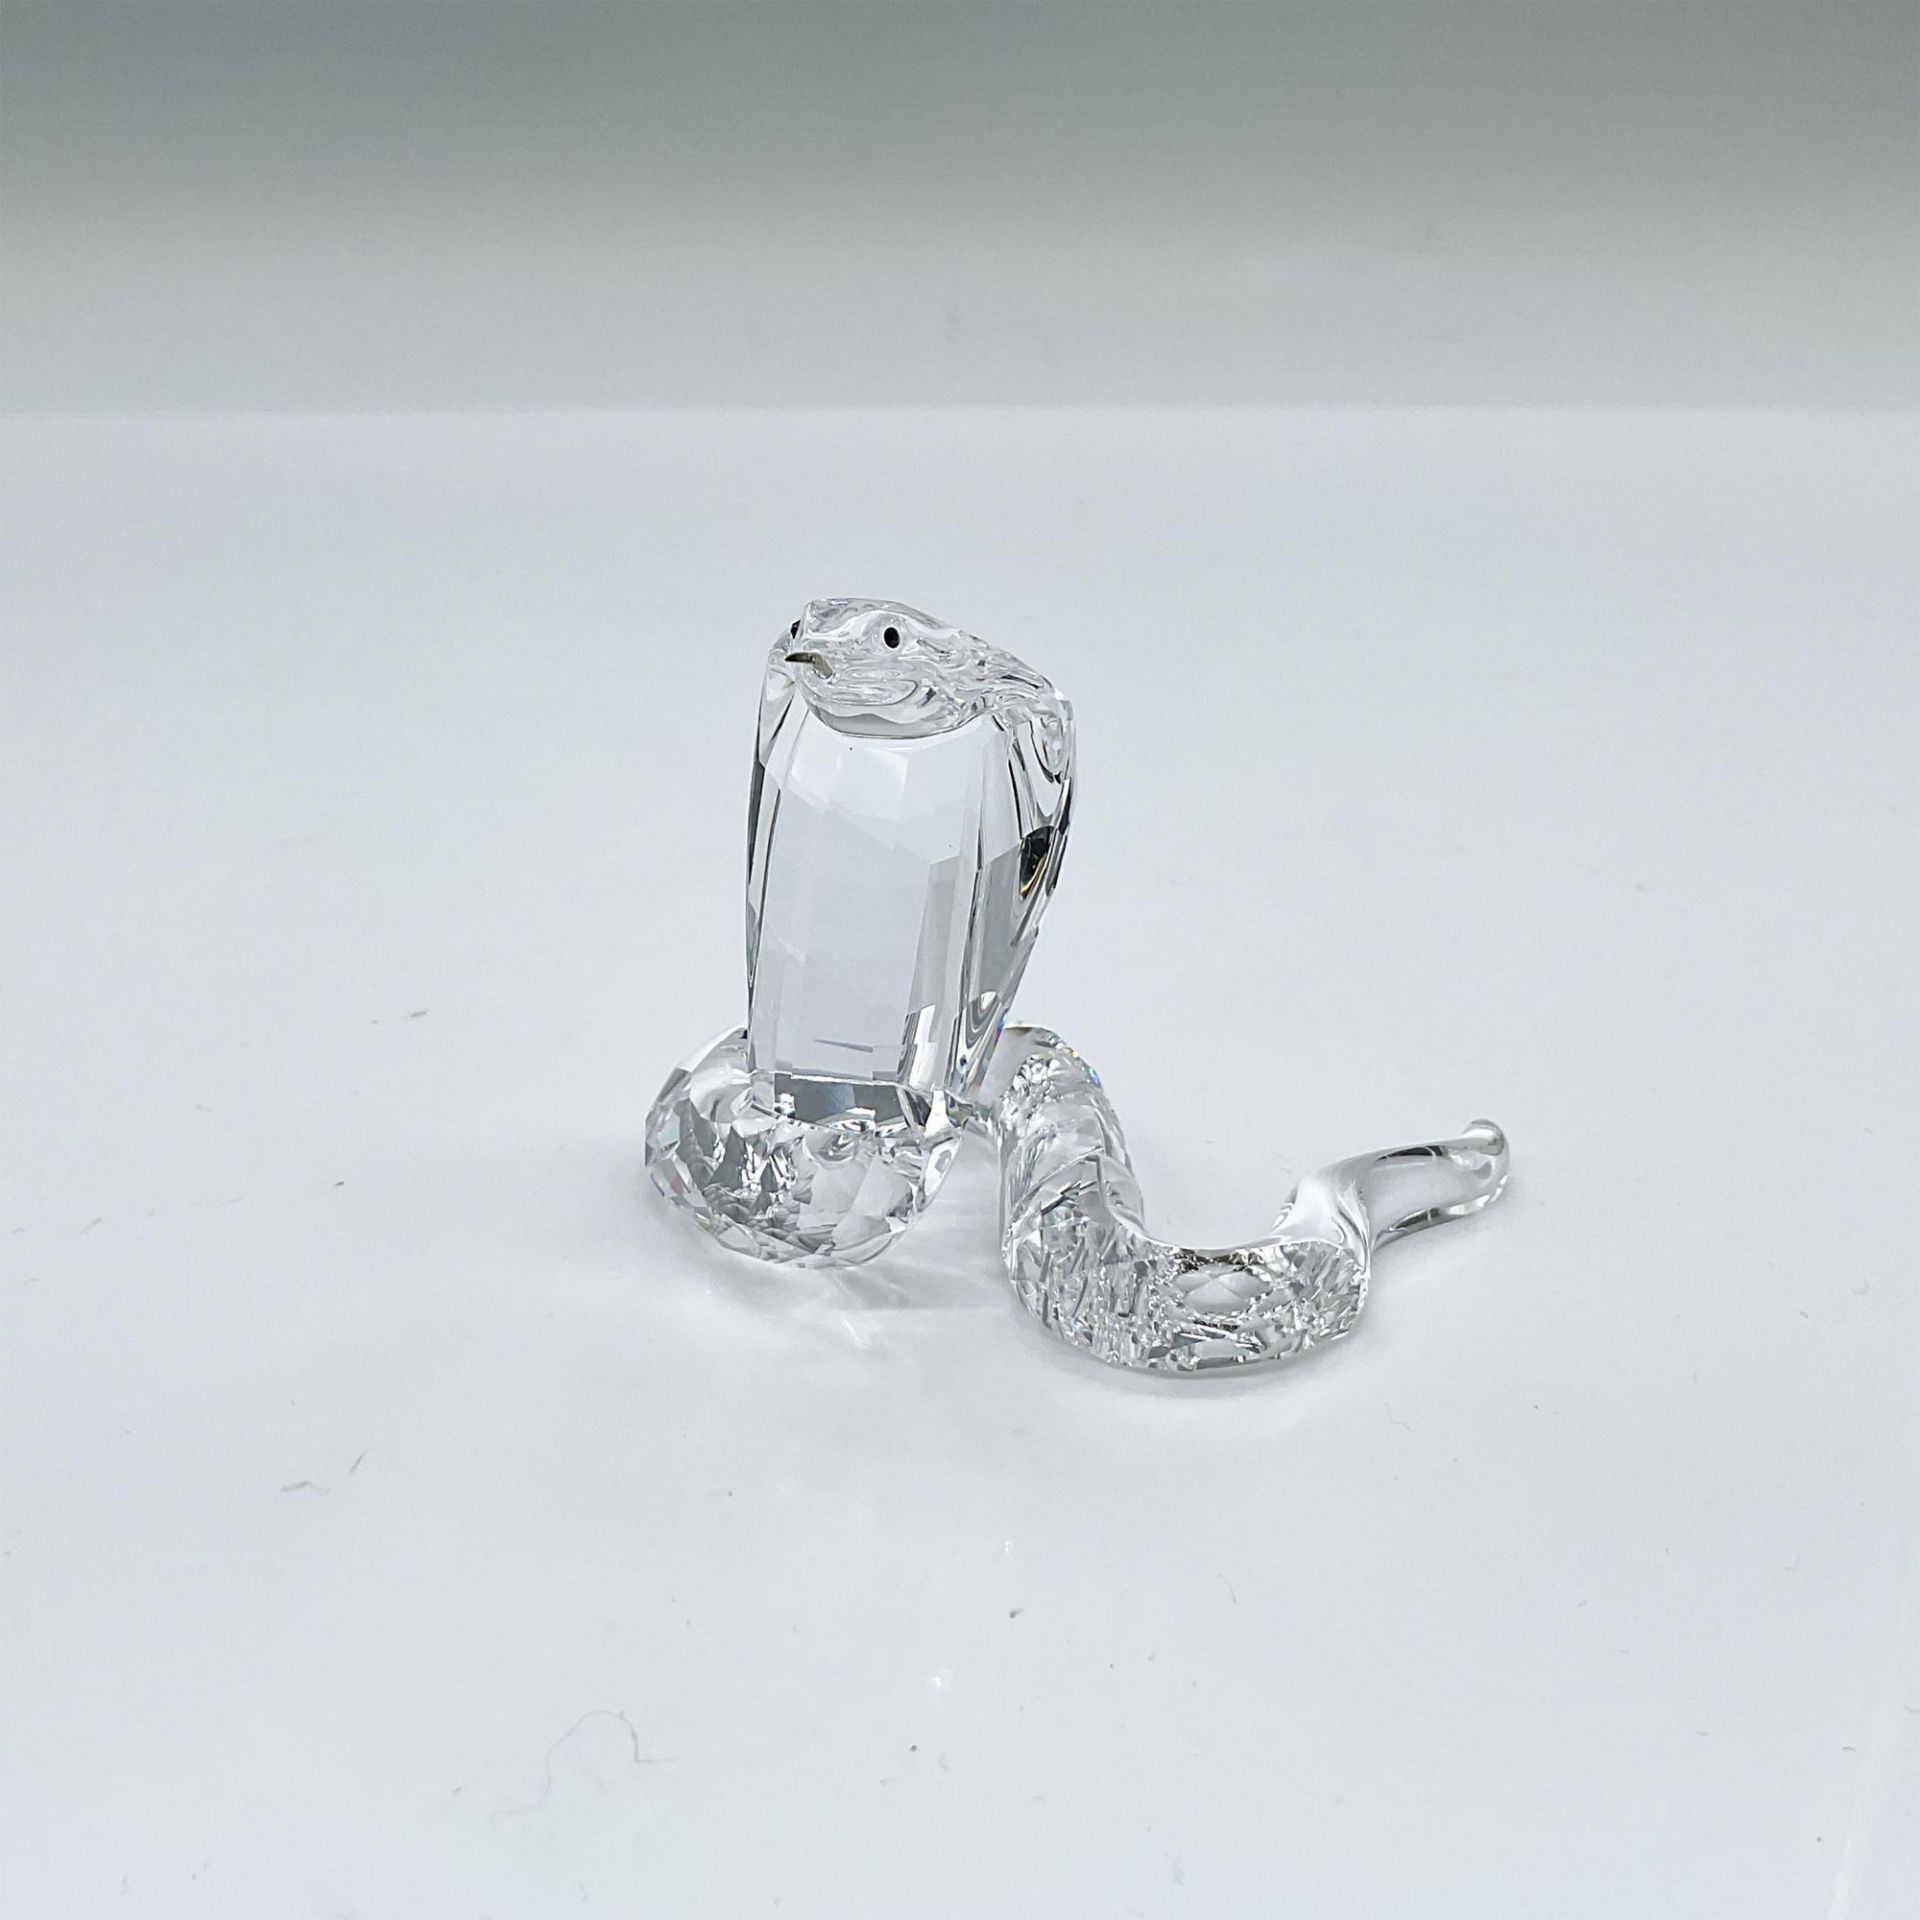 Swarovski Silver Crystal Figurine, Cobra